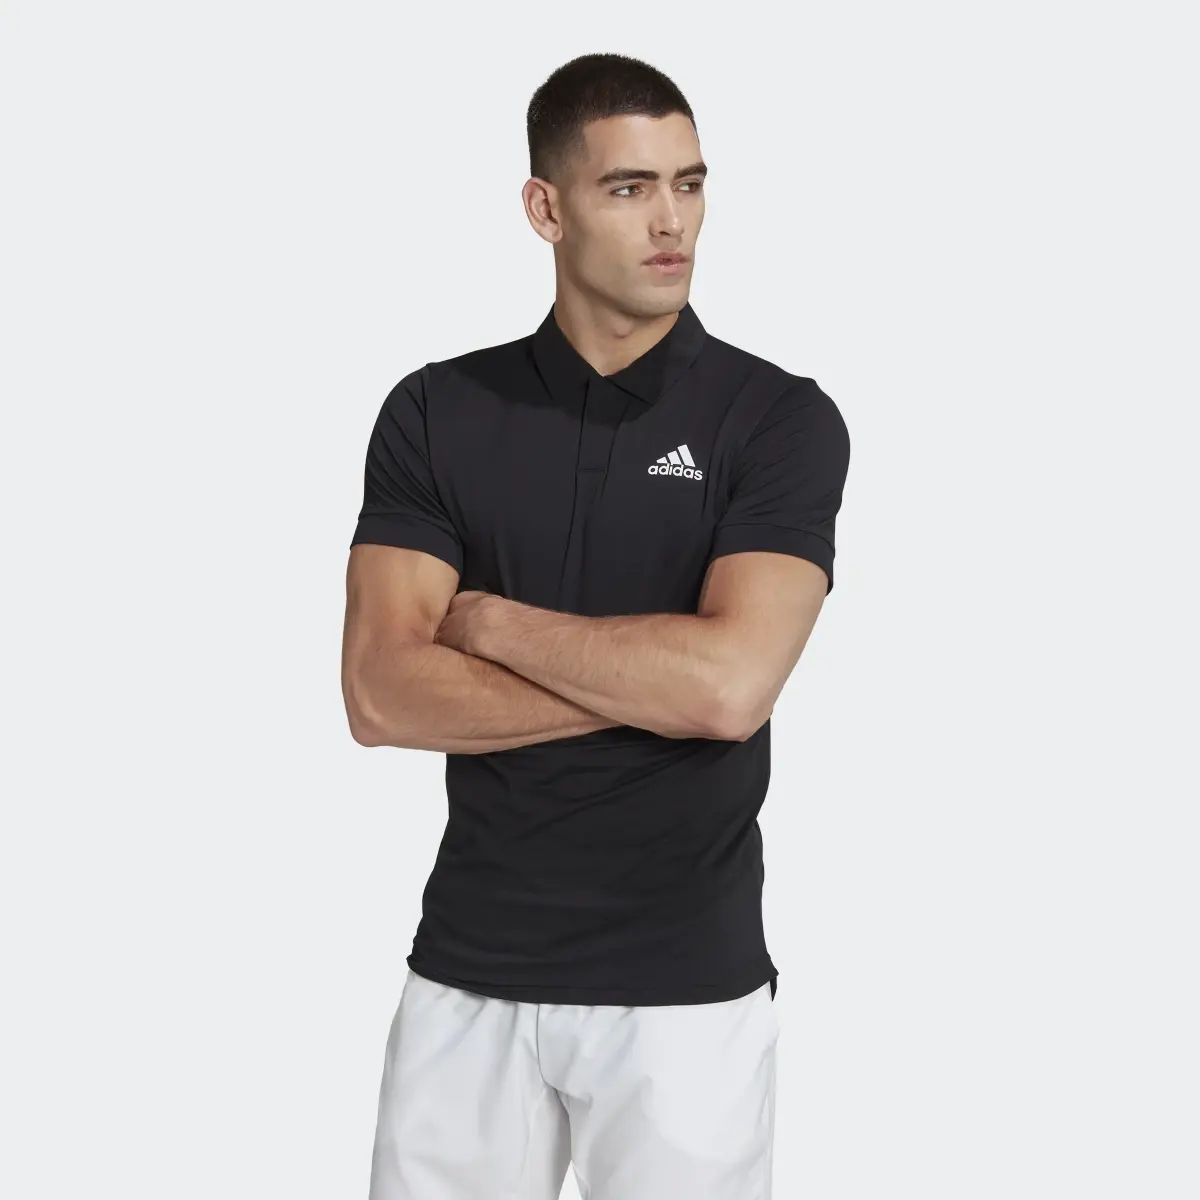 Adidas Tennis New York FreeLift Polo Shirt. 2